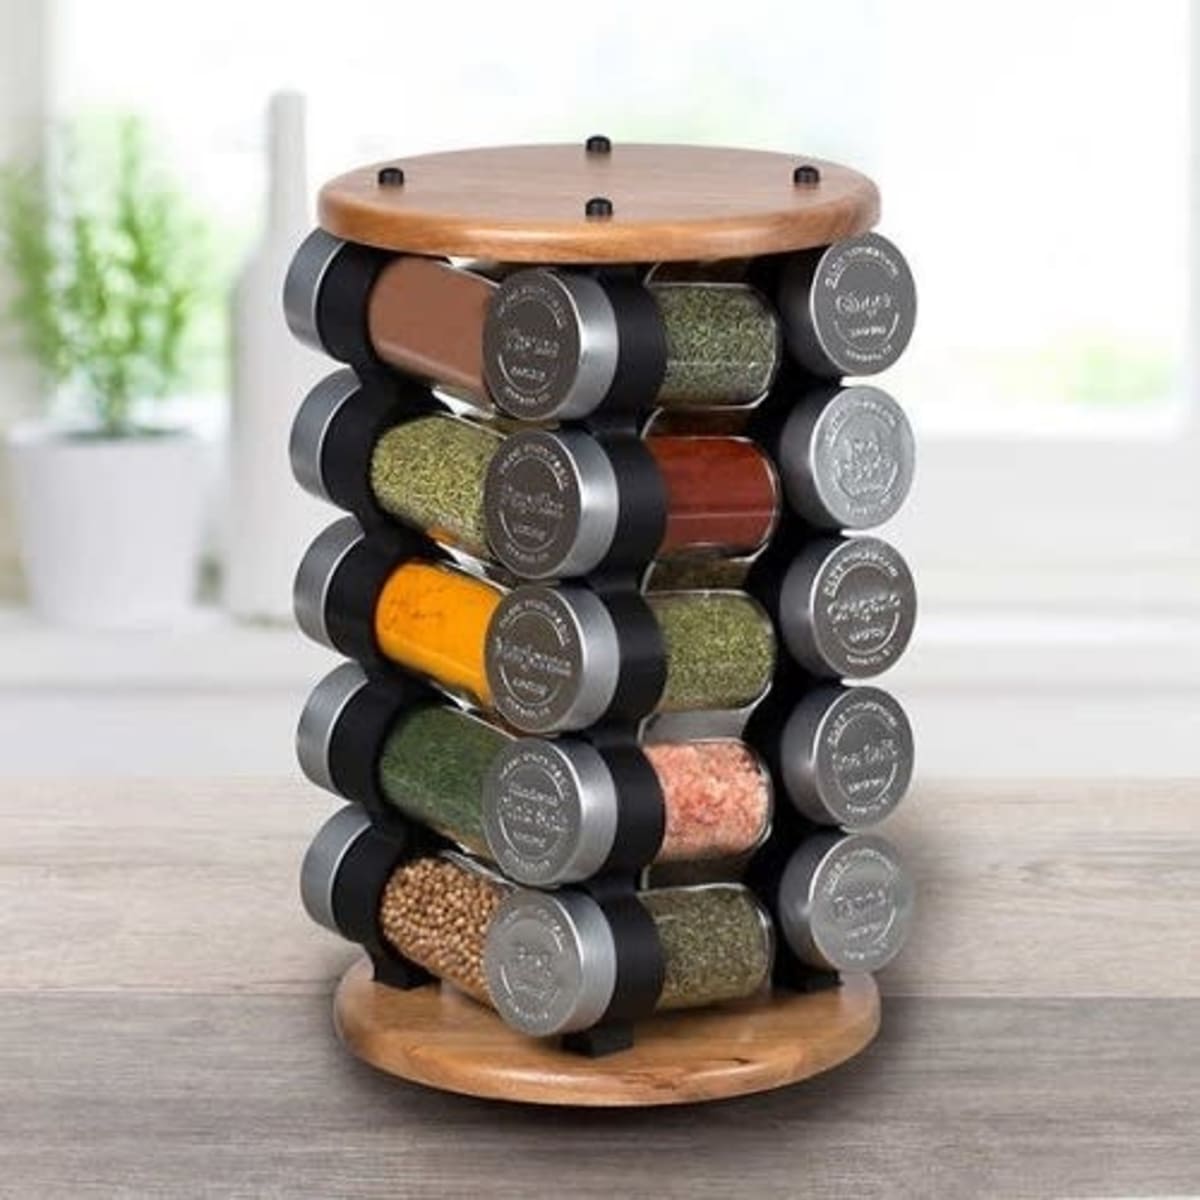 ProCook Contemporary Spice Rack 20 Jars